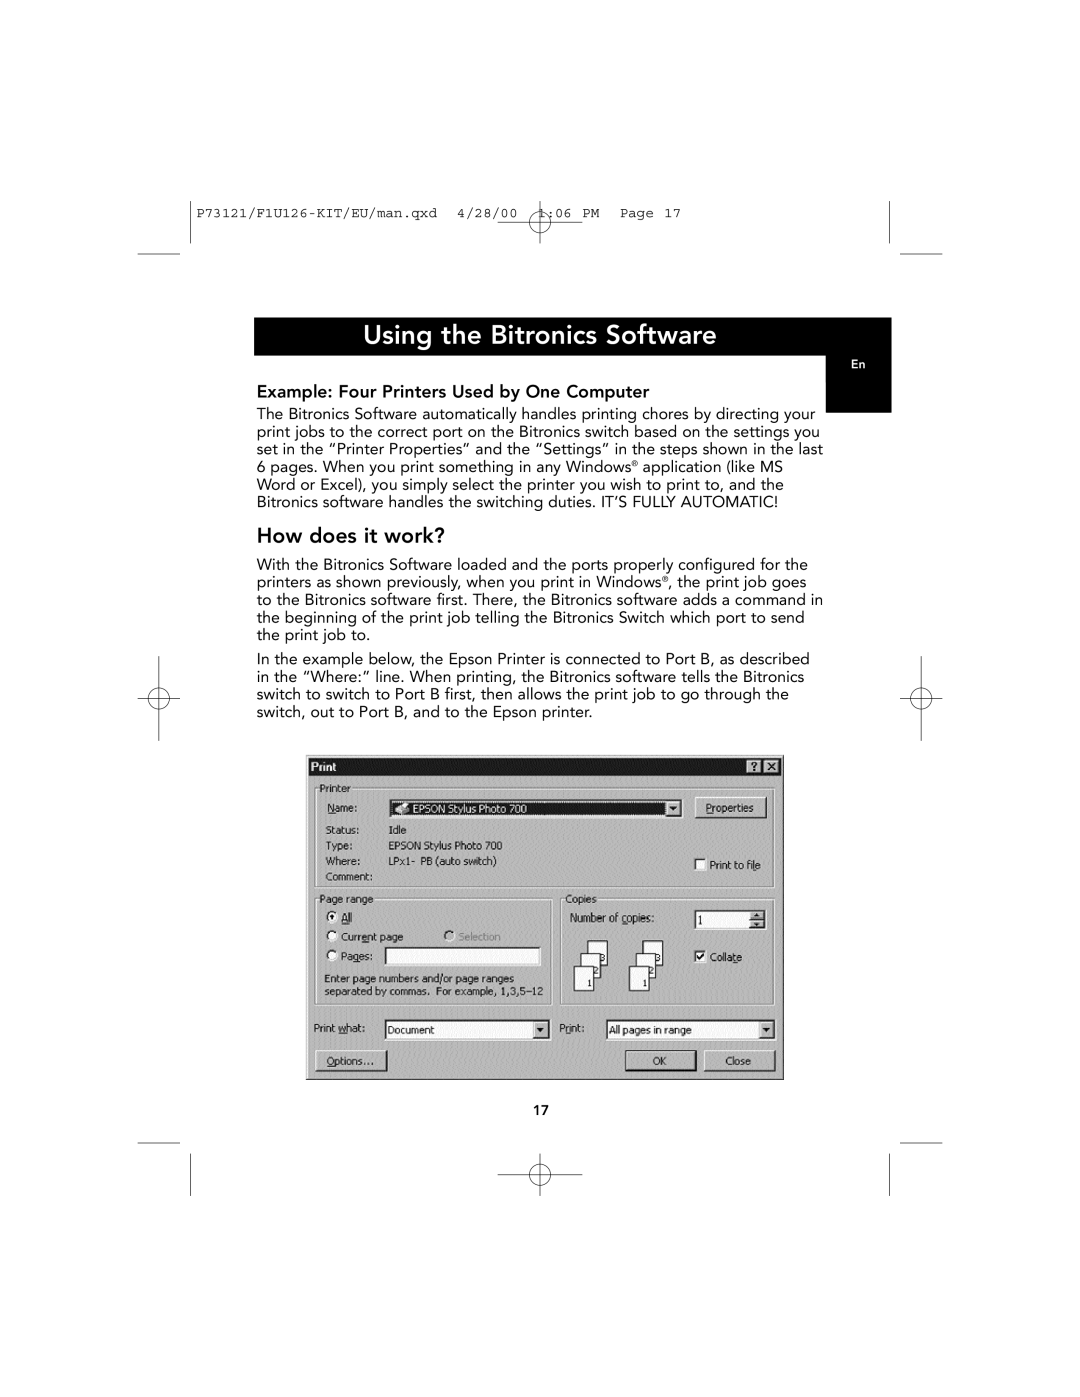 Belkin F1U126-KIT, P73121 user manual Using the Bitronics Software, How does it work? 